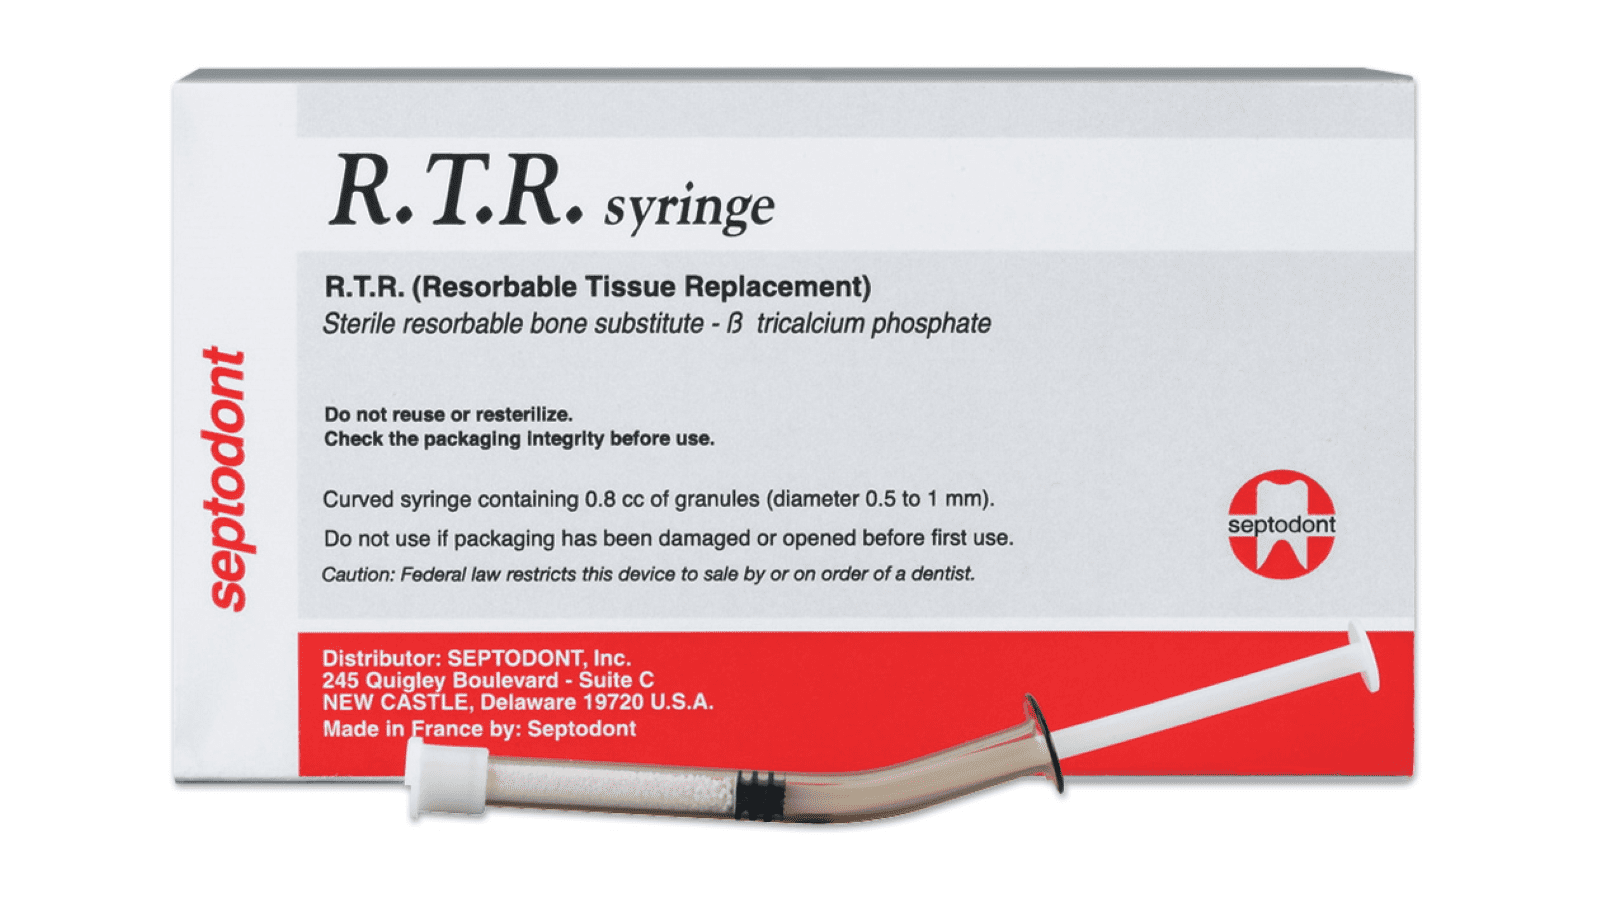 Rtr syringe packaging with syringe